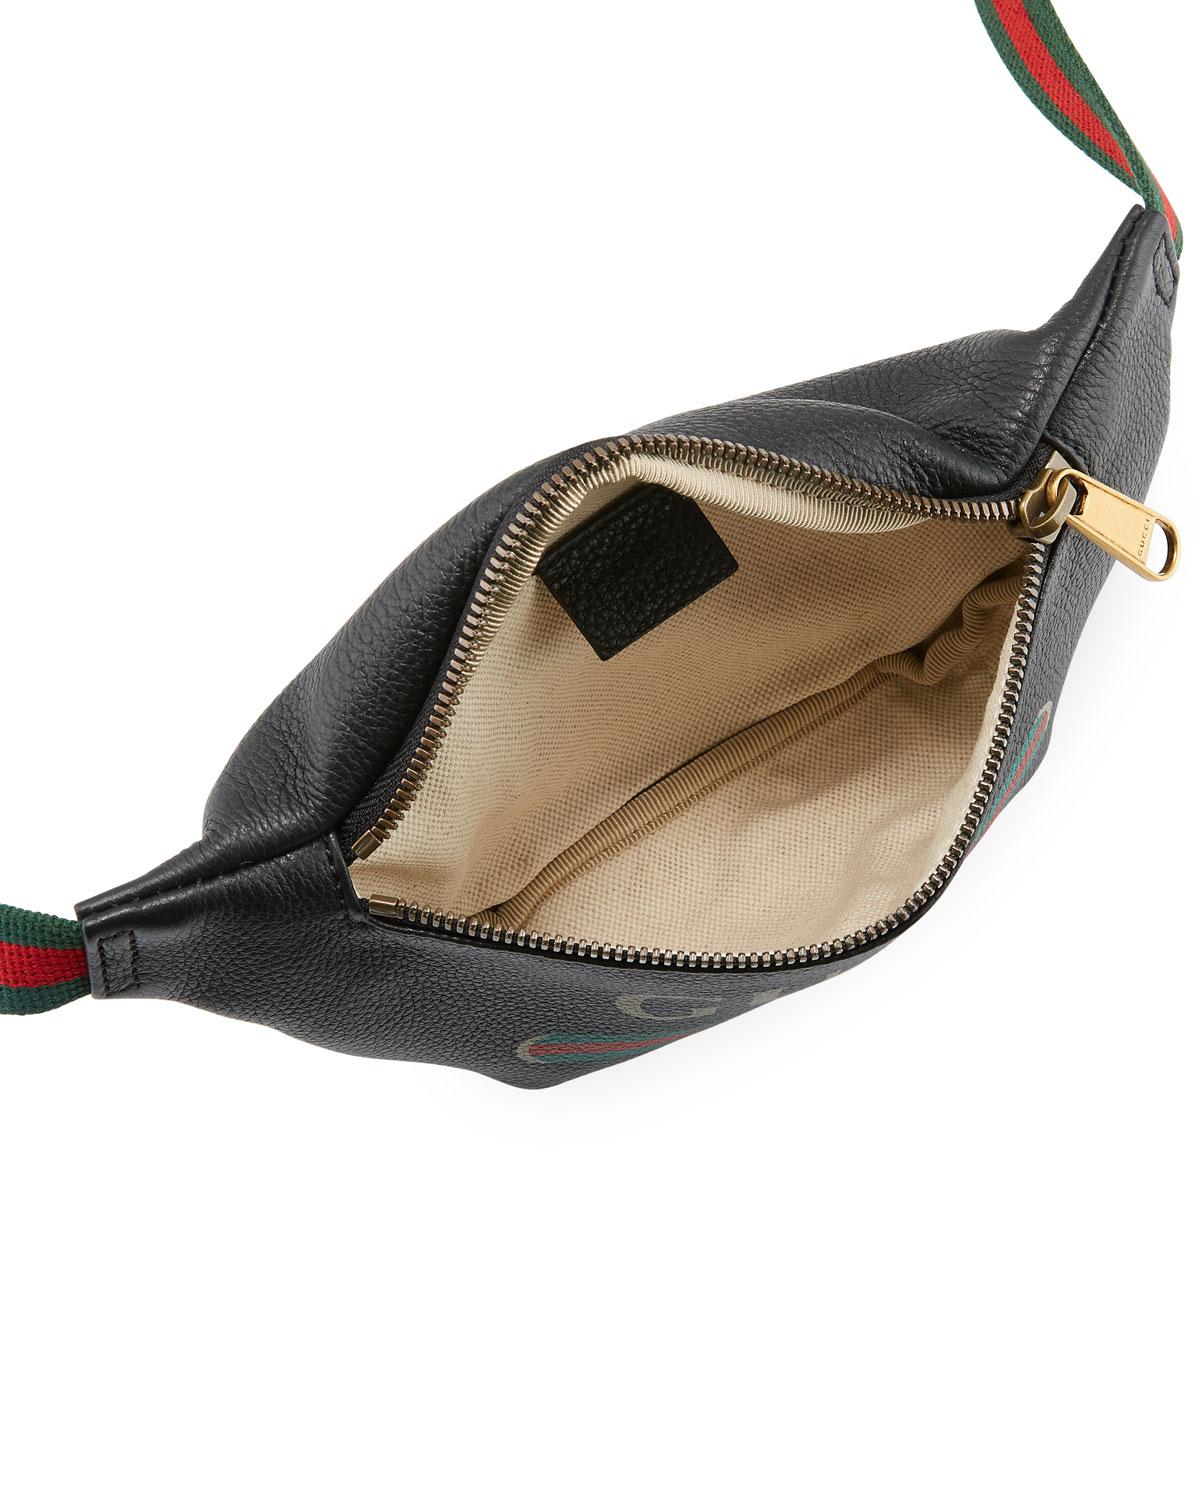 Gucci Men&#39;s Small Retro Leather Belt Bag in Black - Lyst